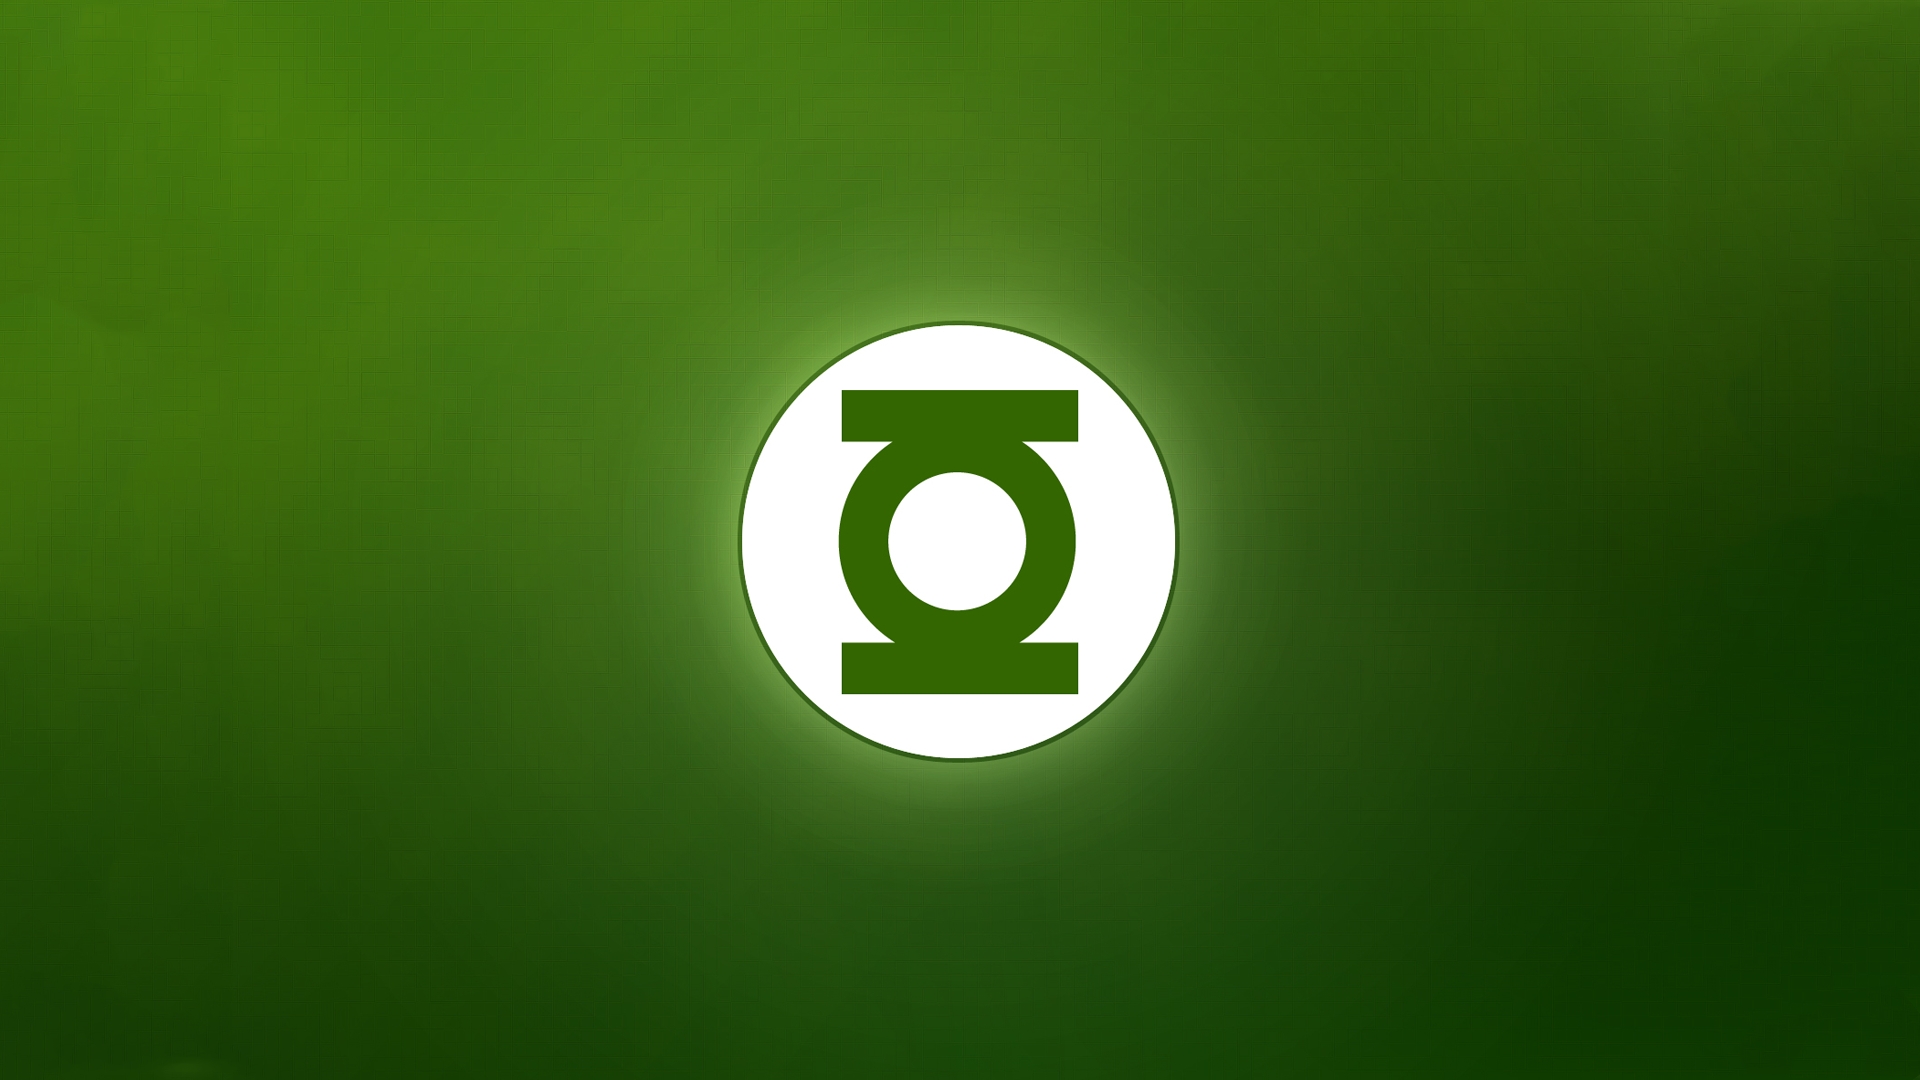 green lantern corps, comics, green lantern, logo